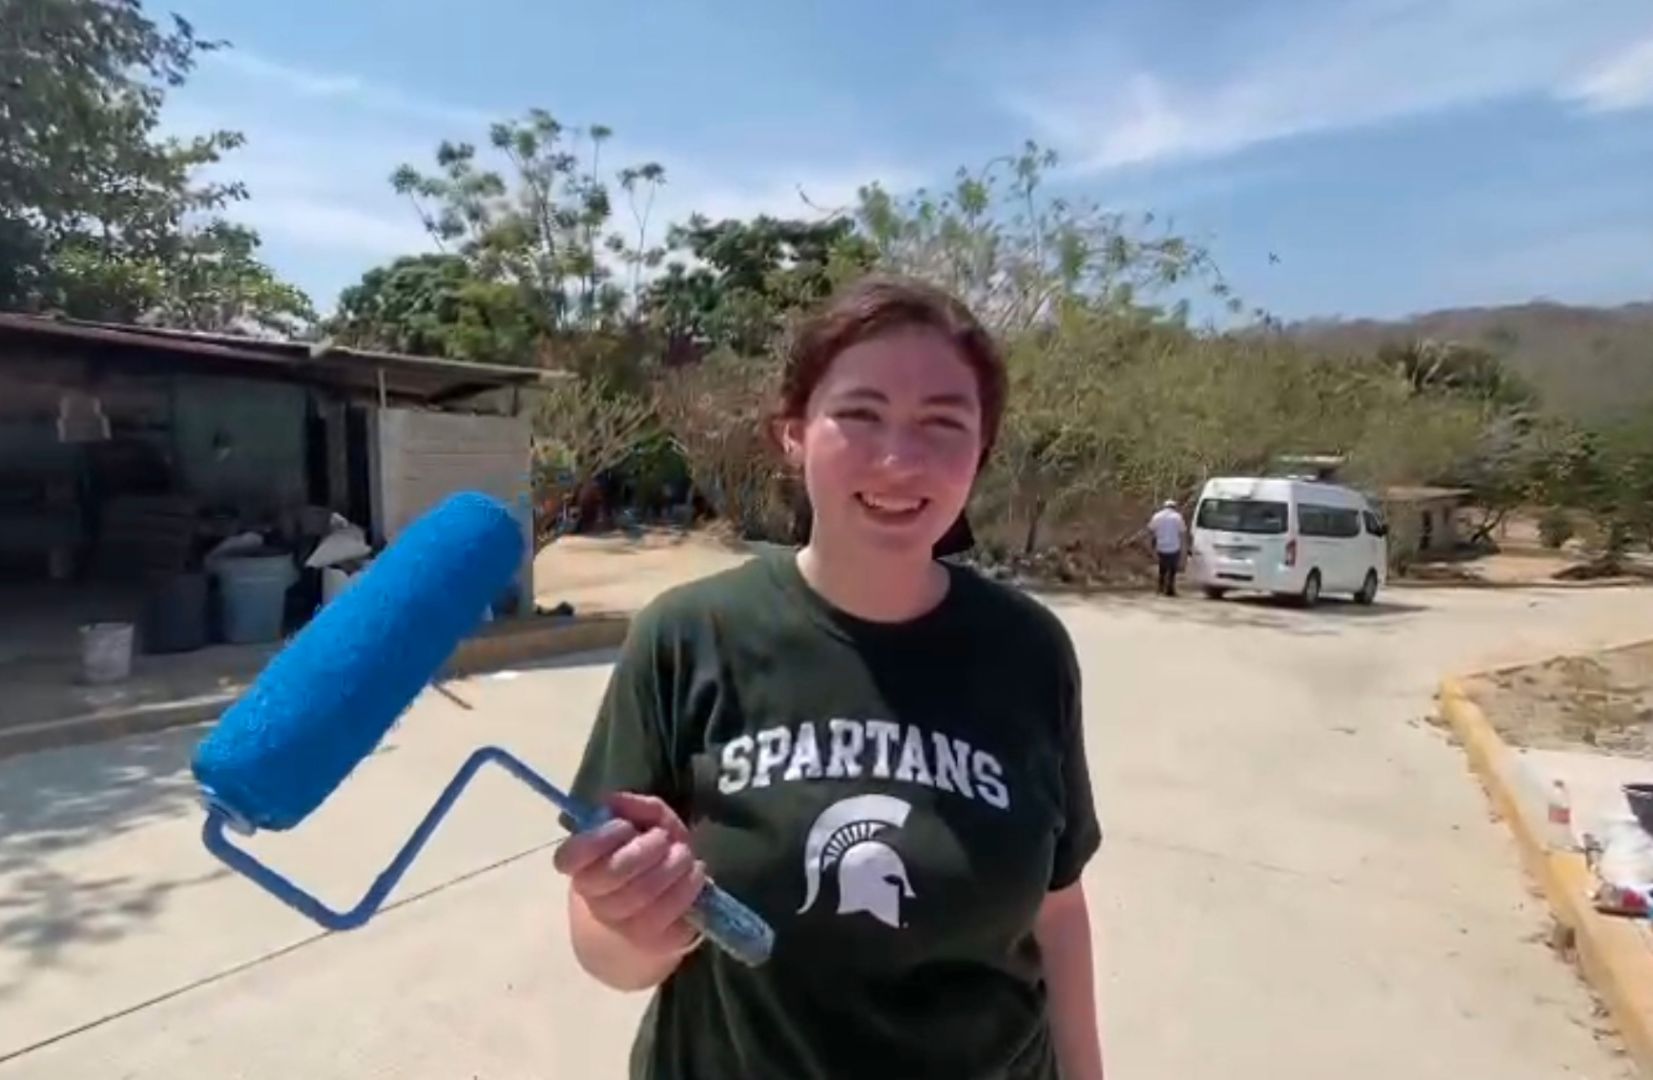 Chloe holding a paint roller wearing a spartan shirt